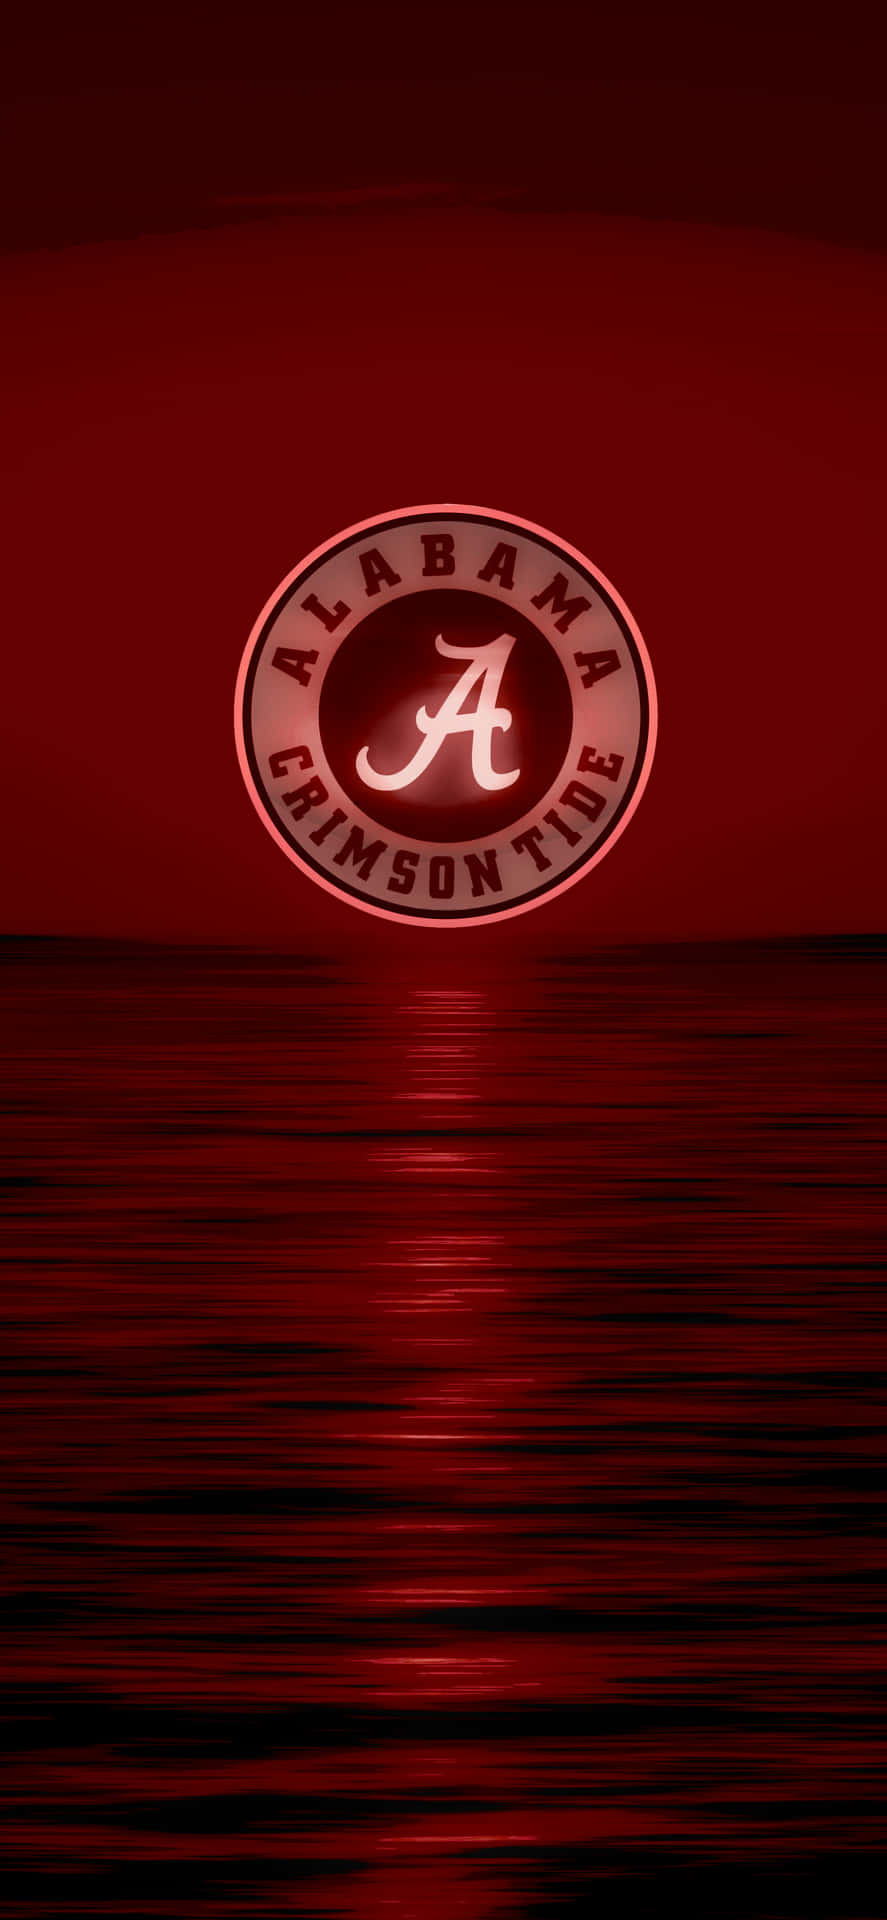 Logofür Das Football-team Der University Of Alabama Wallpaper